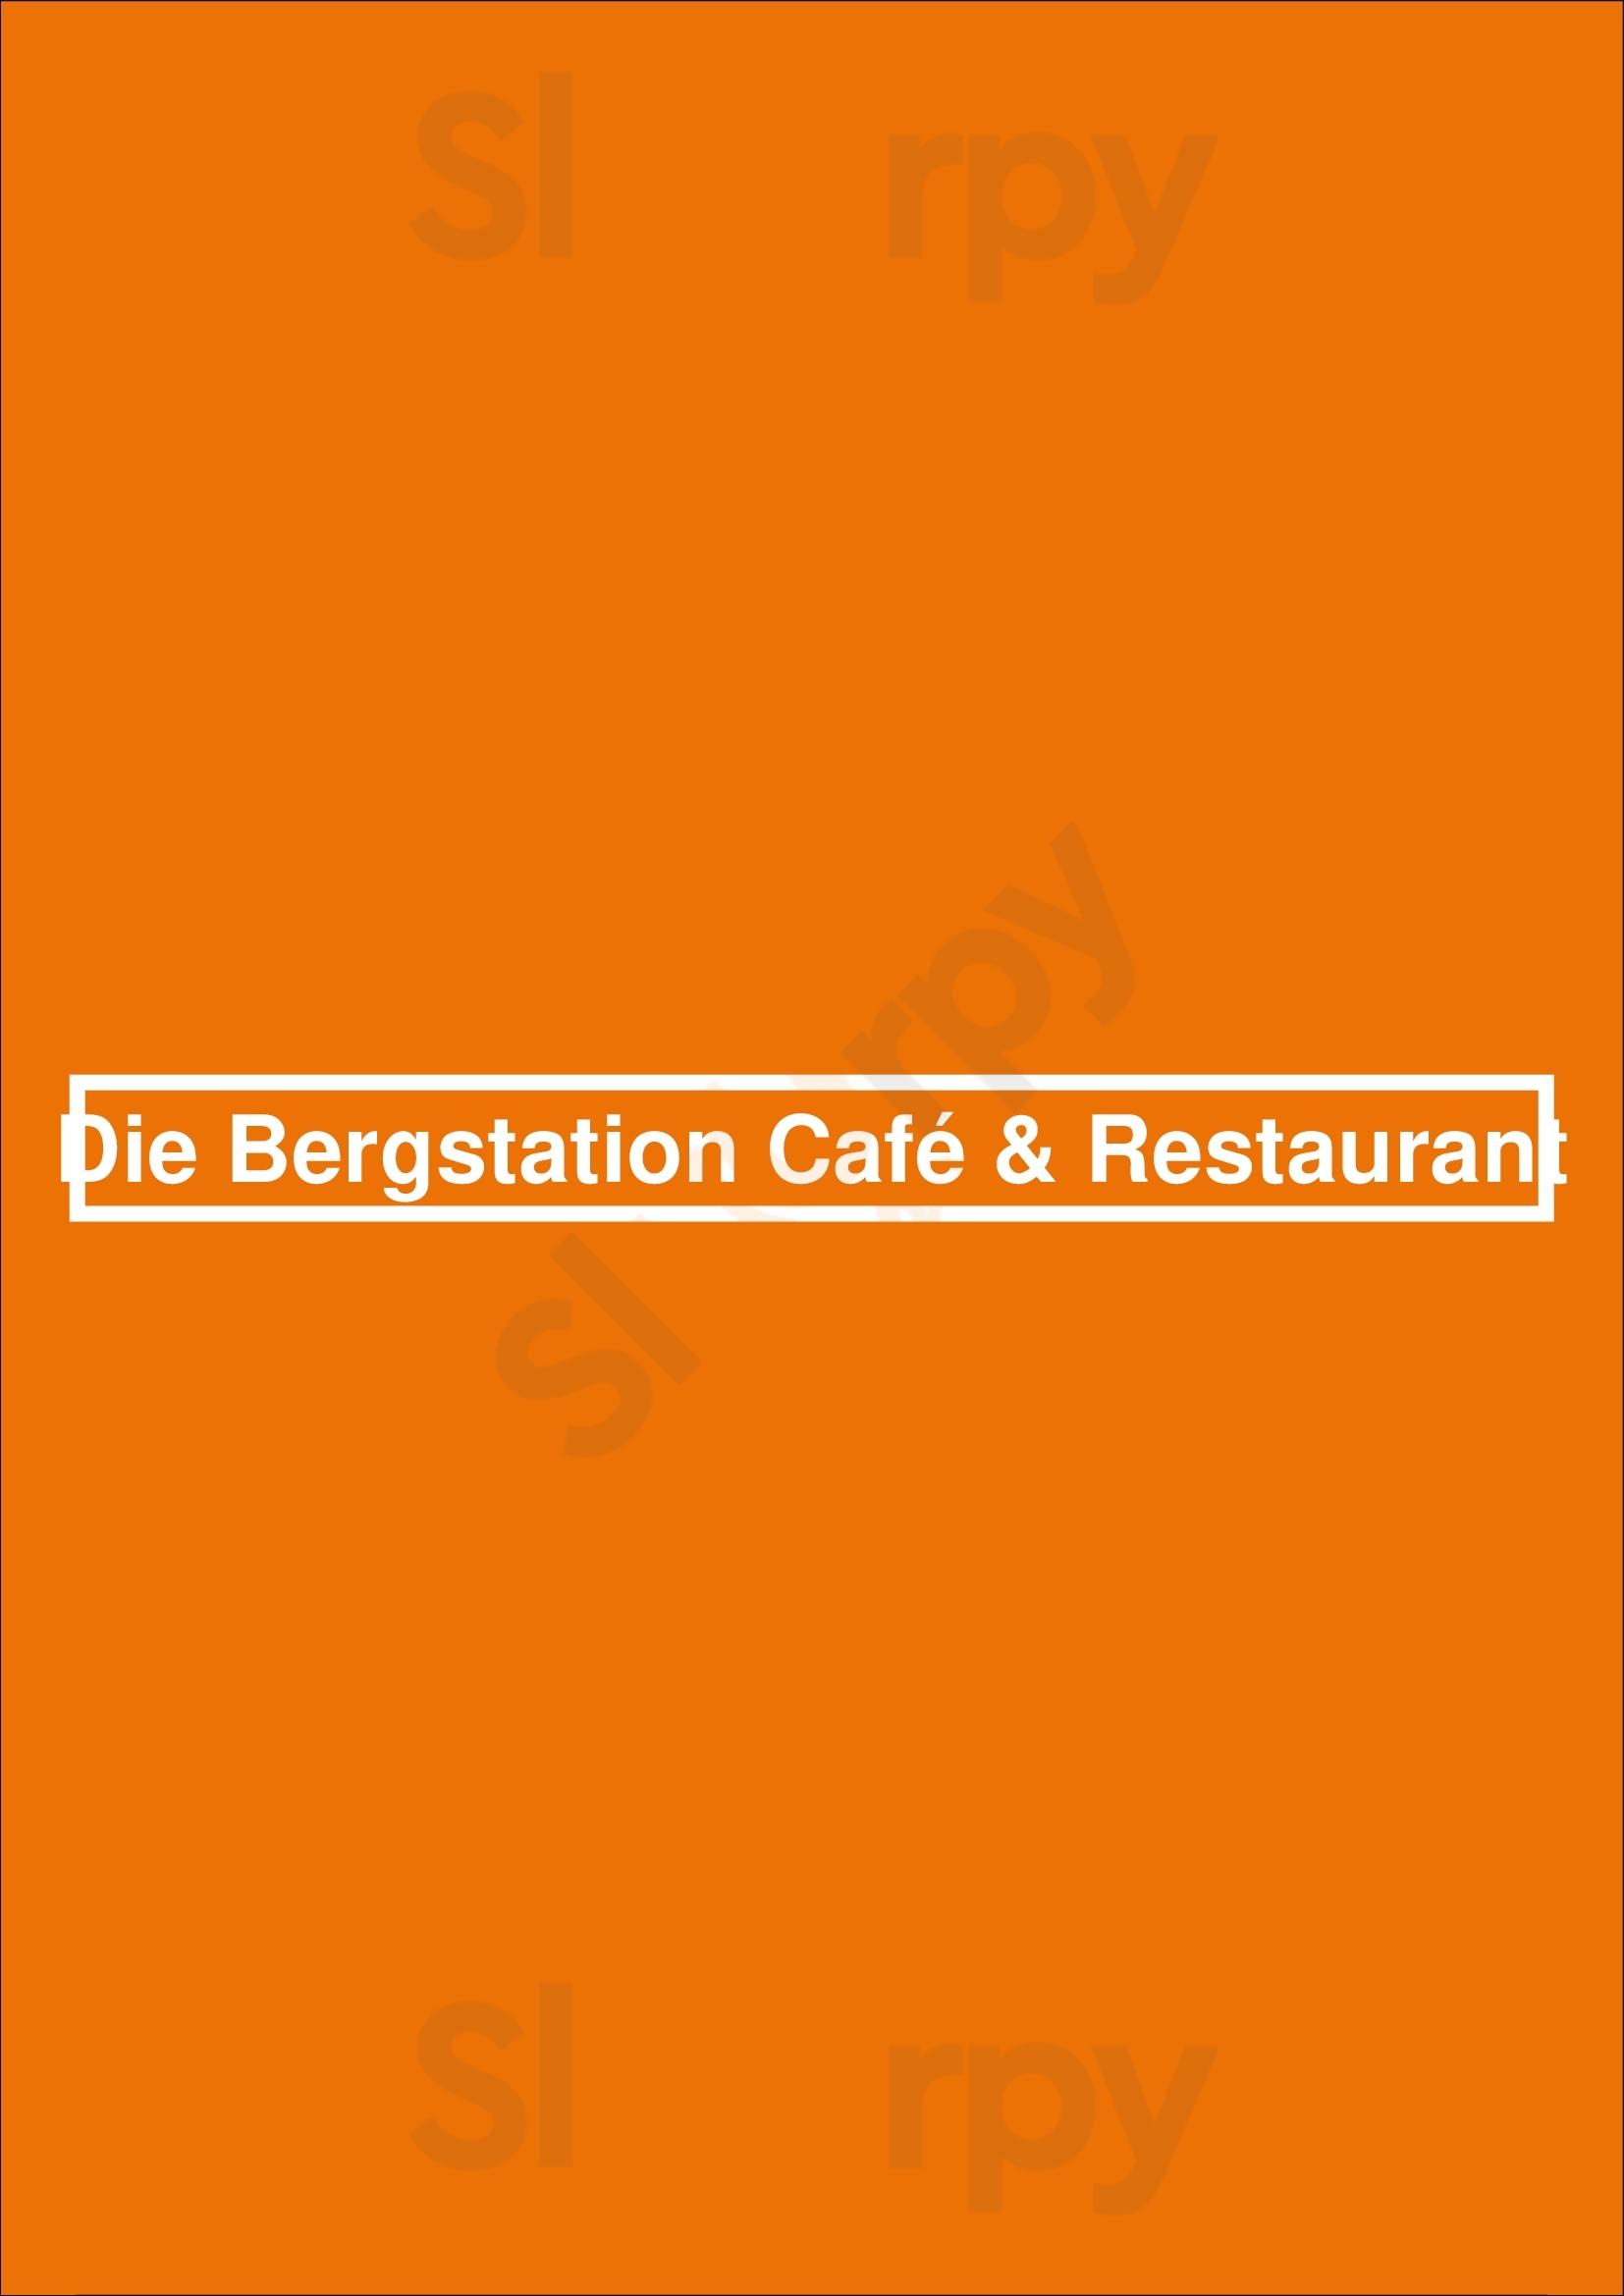 Die Bergstation Café & Restaurant Freiburg Menu - 1